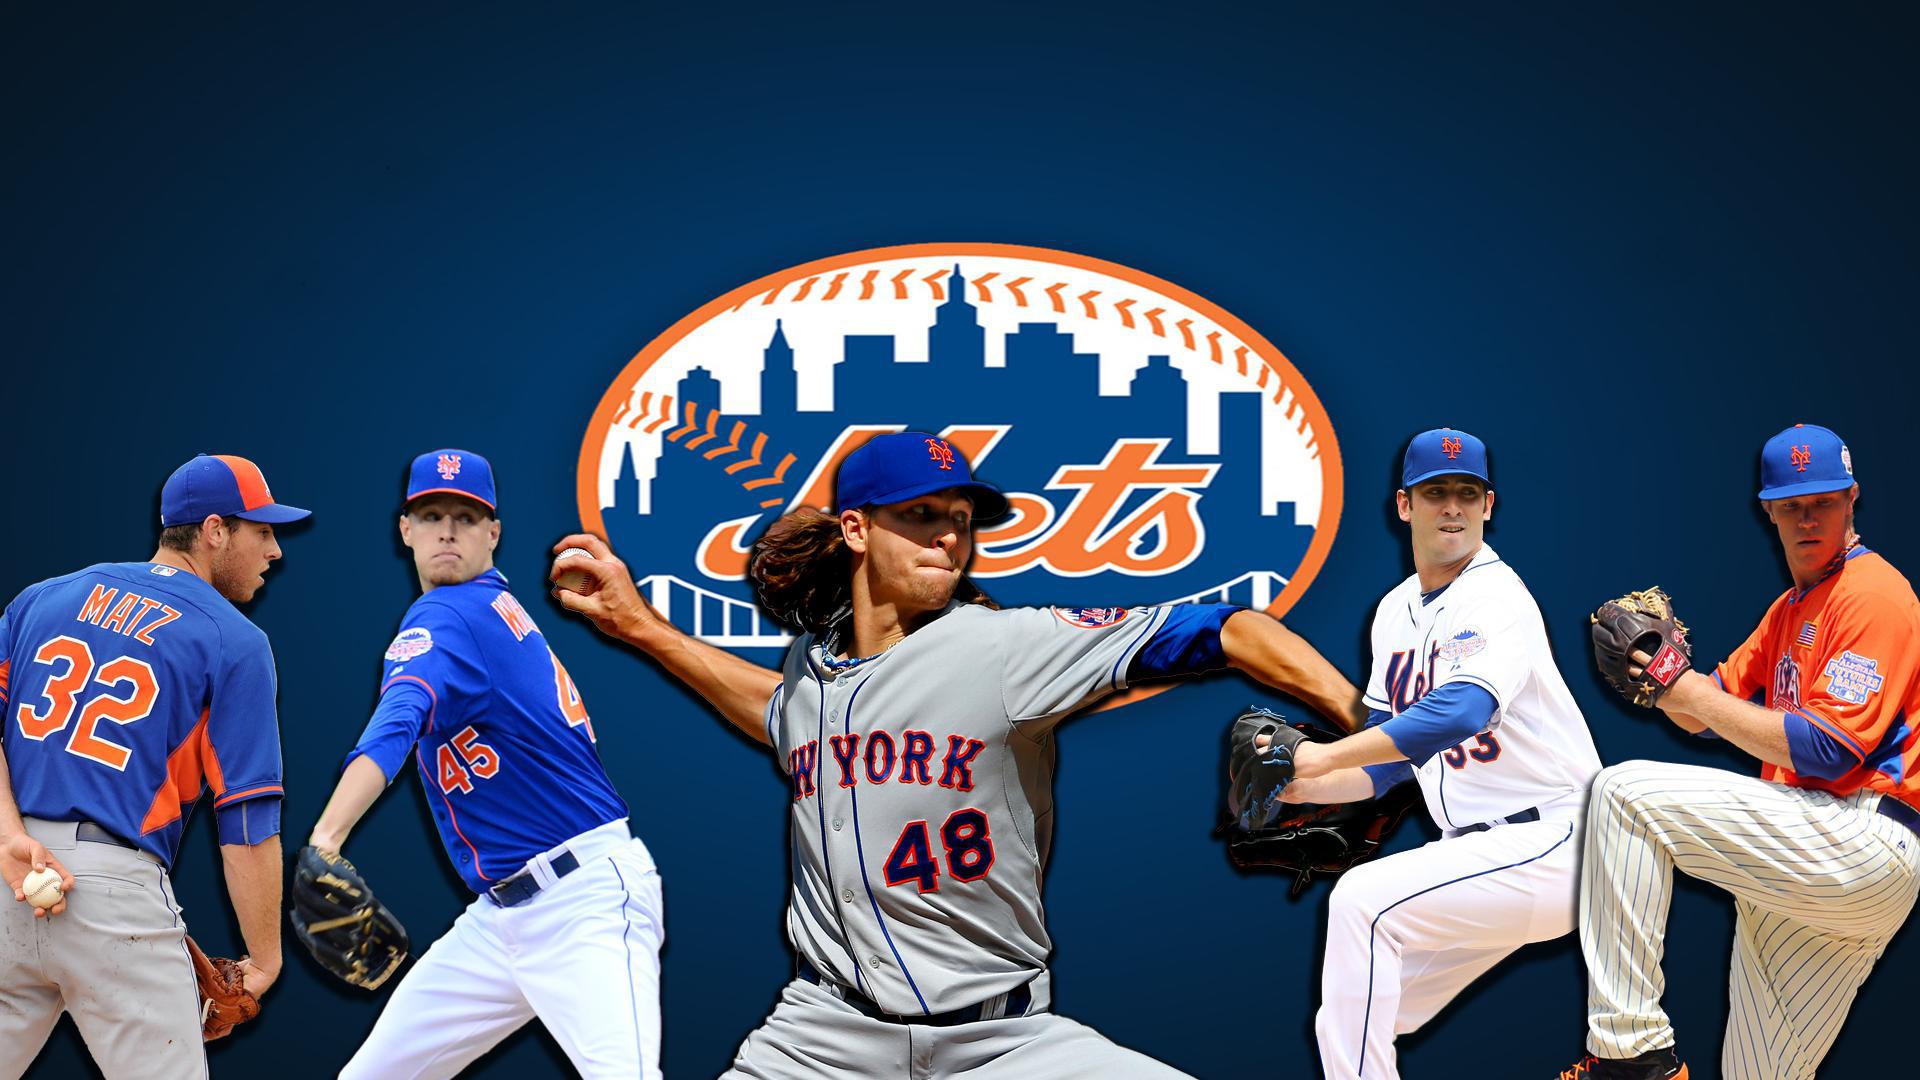 new york mets wallpaper,baseball uniform,sports uniform,college baseball,baseball,baseball player